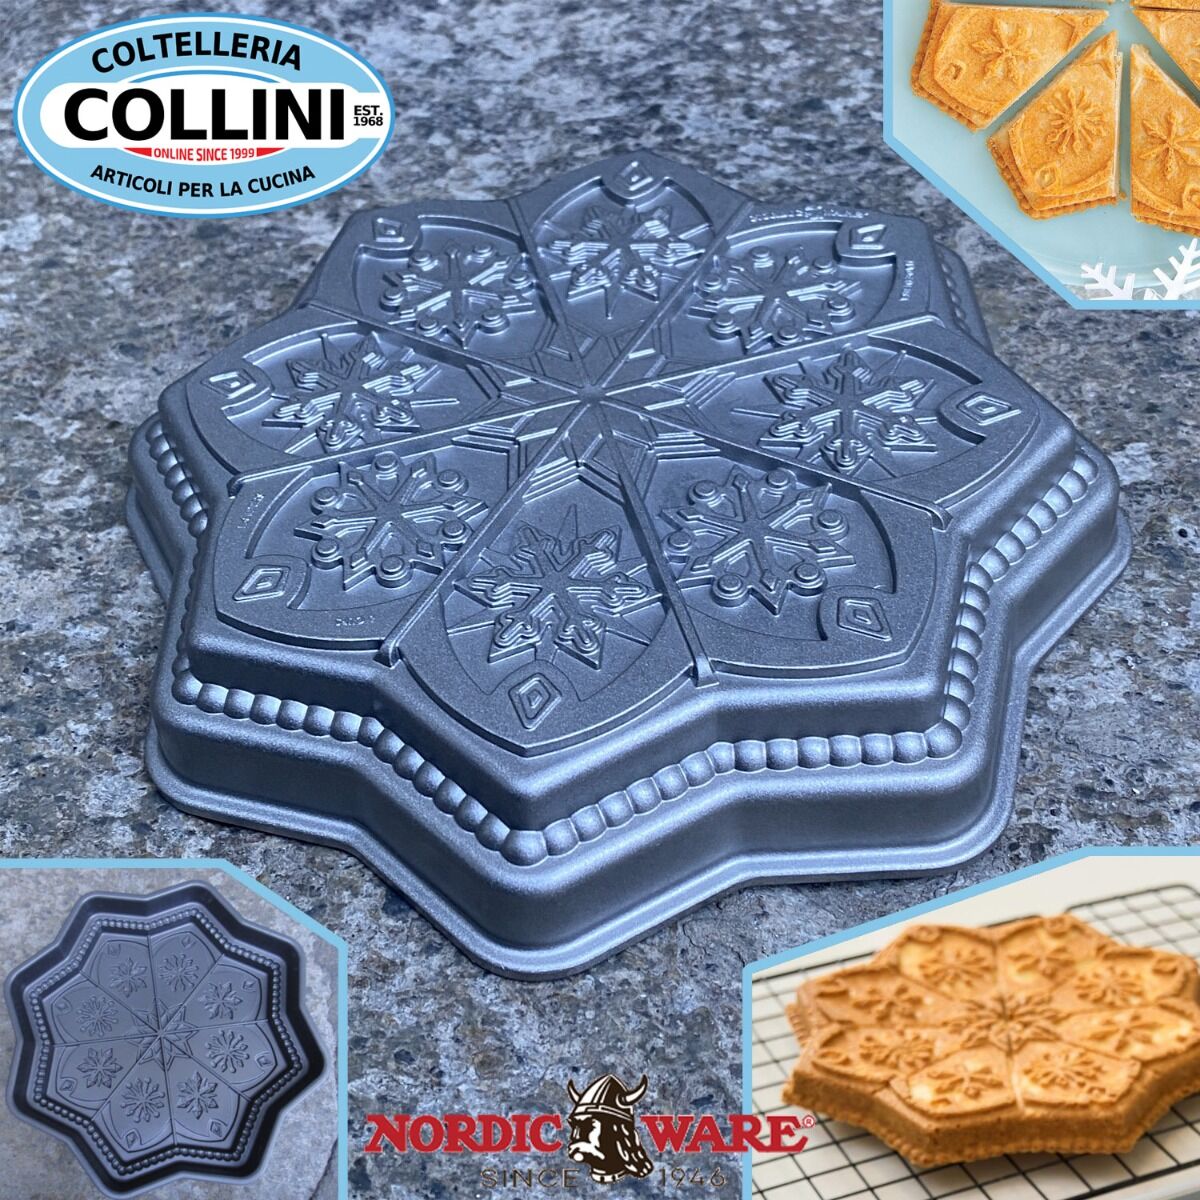 https://www.coltelleriacollini.com/media/catalog/product/cache/2d742e981ffa5c28990fe05a9b6044c9/image/157318b85/nordic-ware-sweet-snowflakes-shortbread-pan.jpg